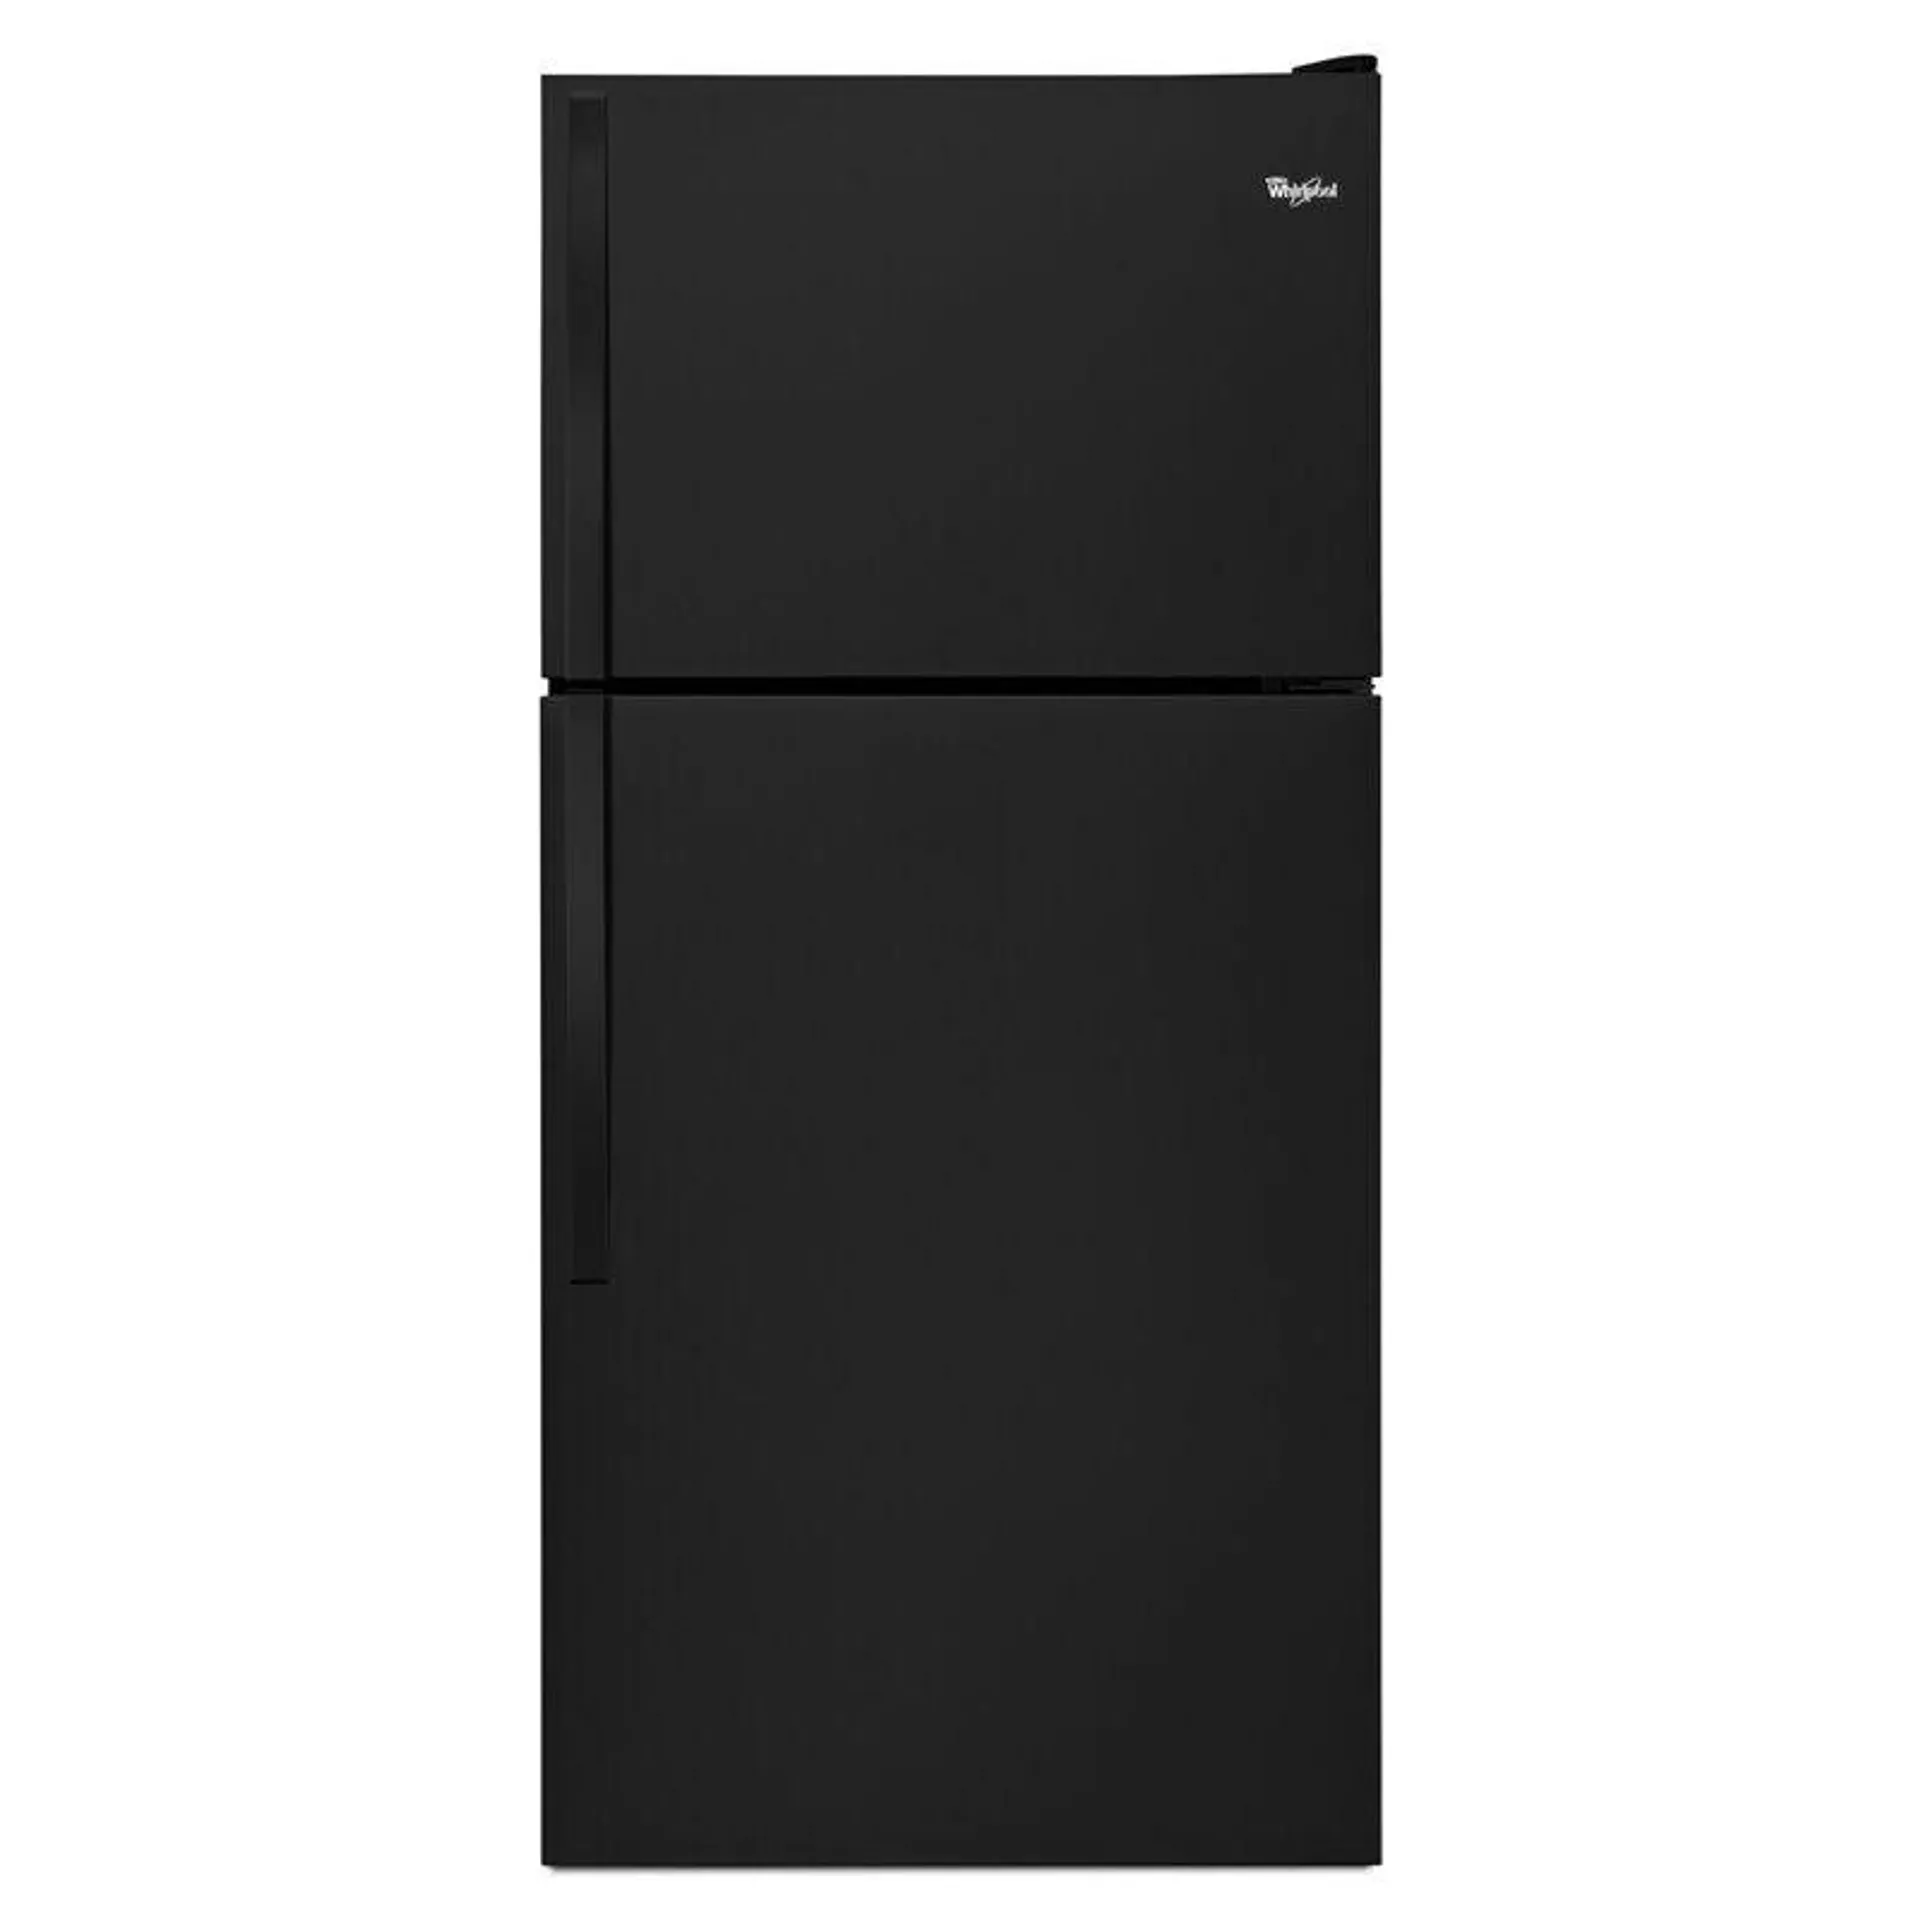 Whirlpool 30 in. 18.2 cu. ft. Top Freezer Refrigerator - Black